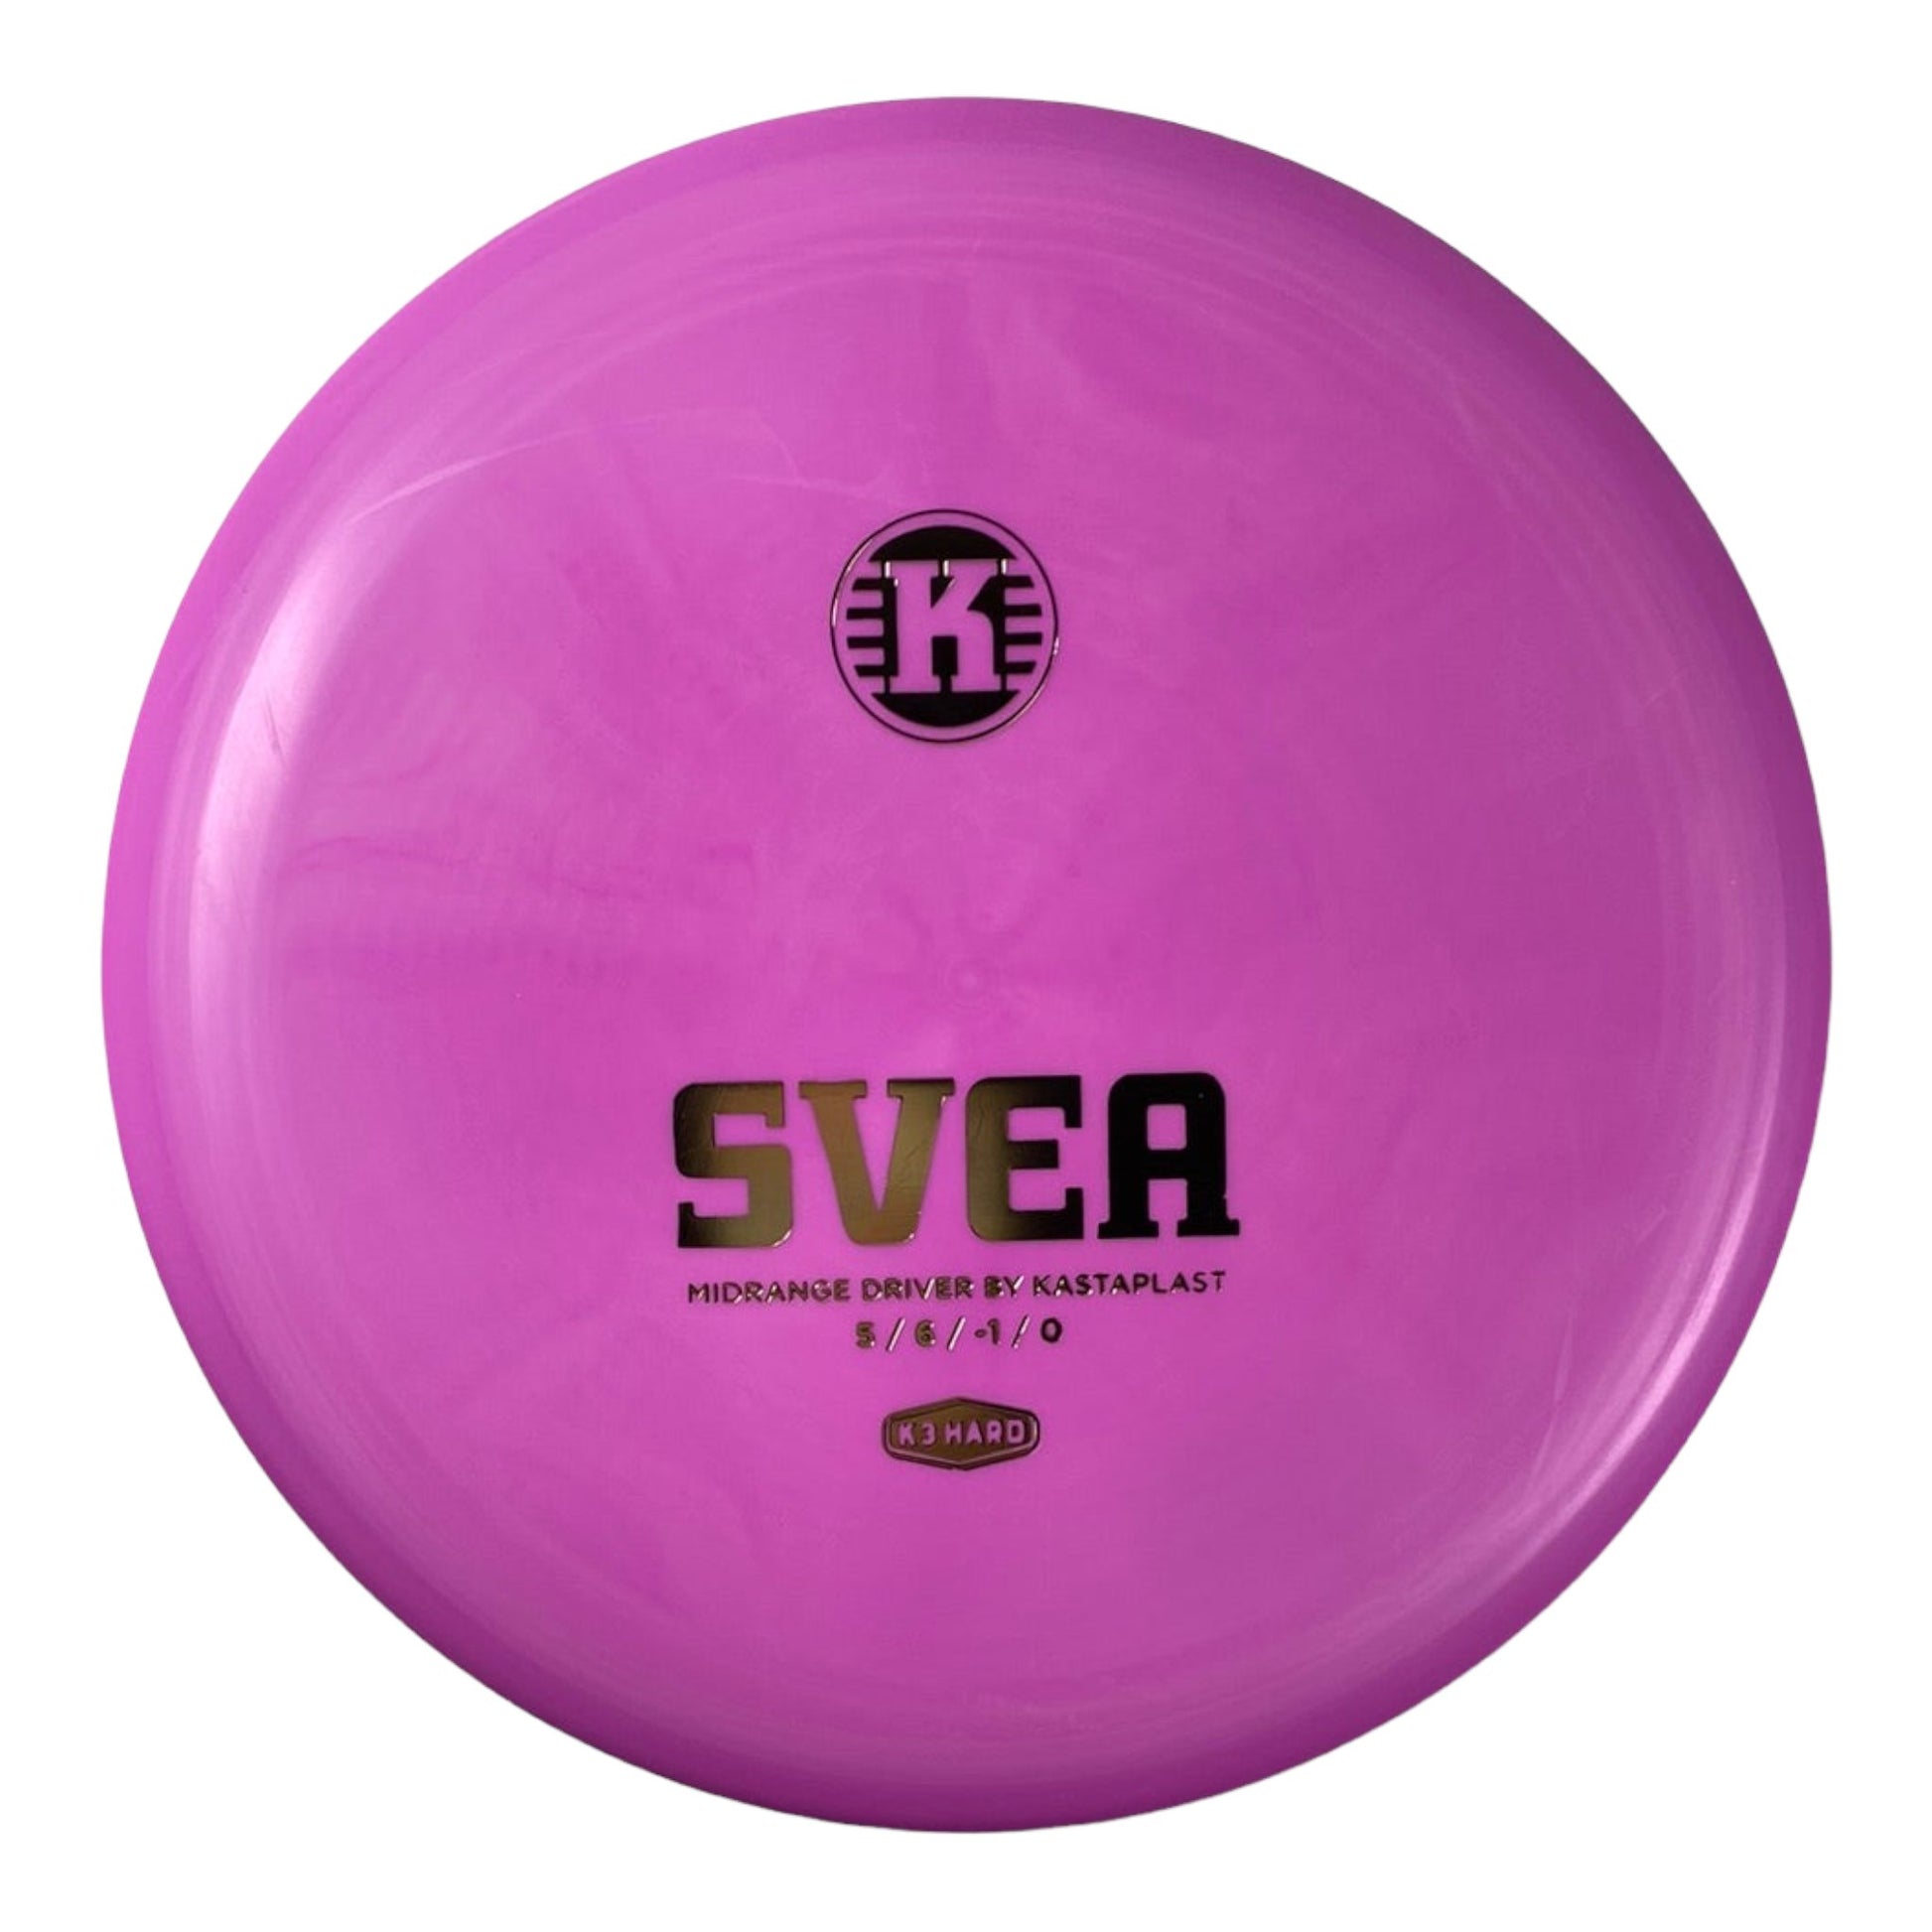 Kastaplast Svea | K3 Hard | Pink/Gold 175g Disc Golf